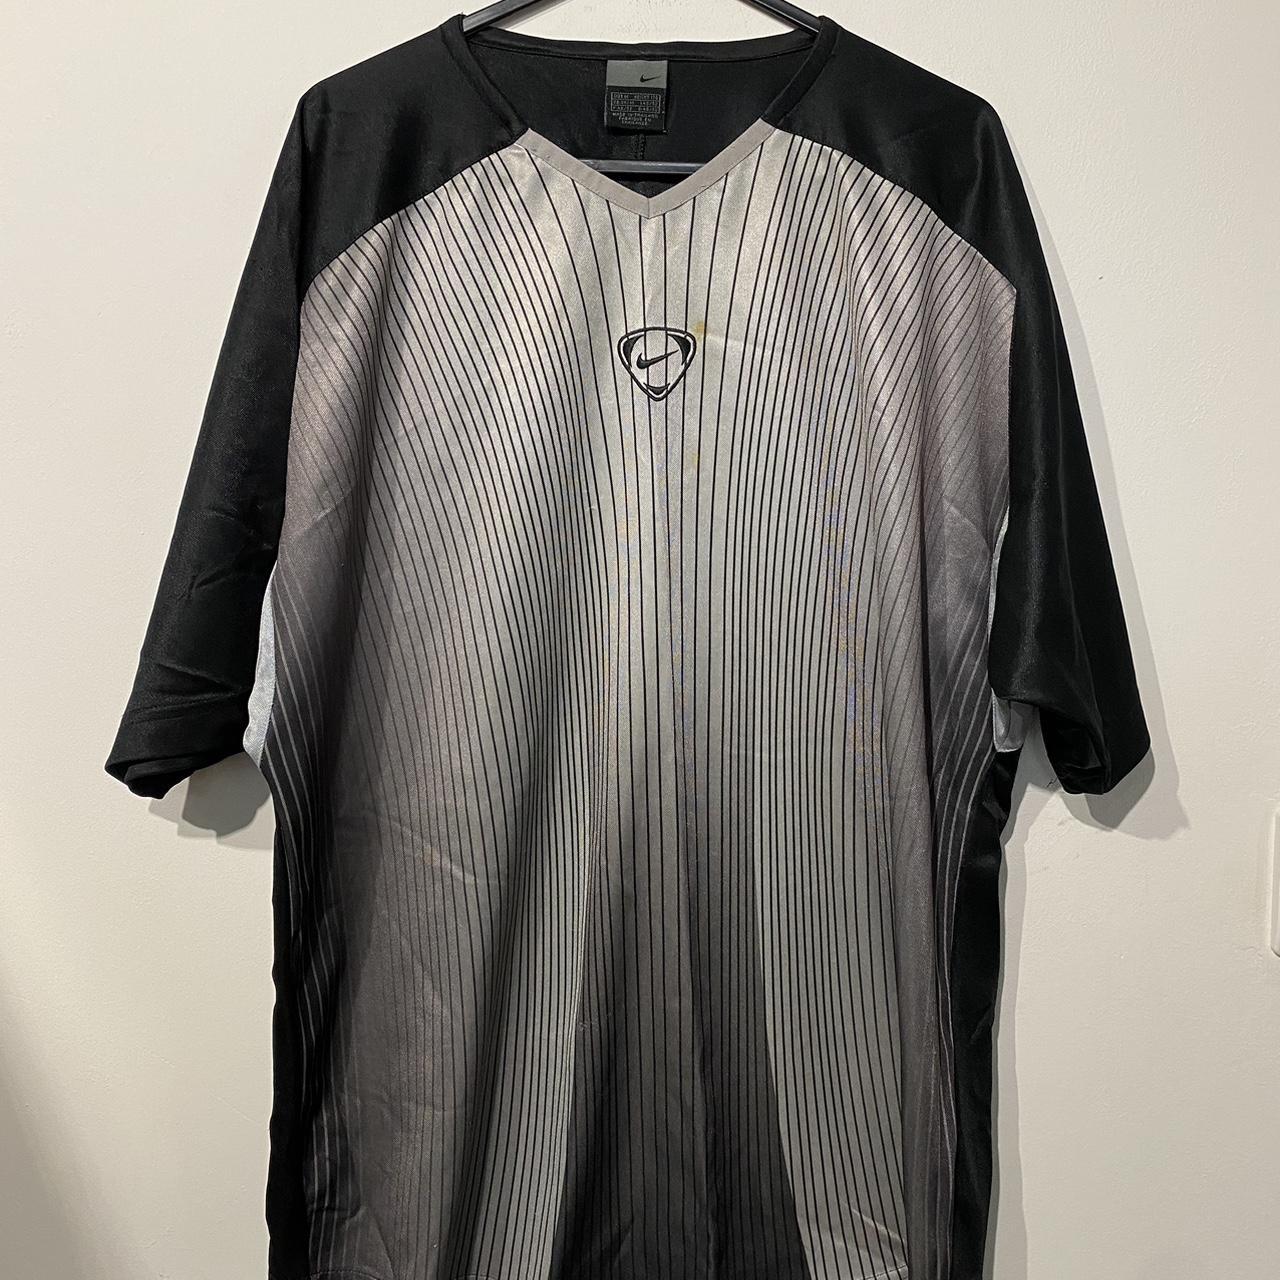 vintage black and silver nike t shirt medium Has... - Depop